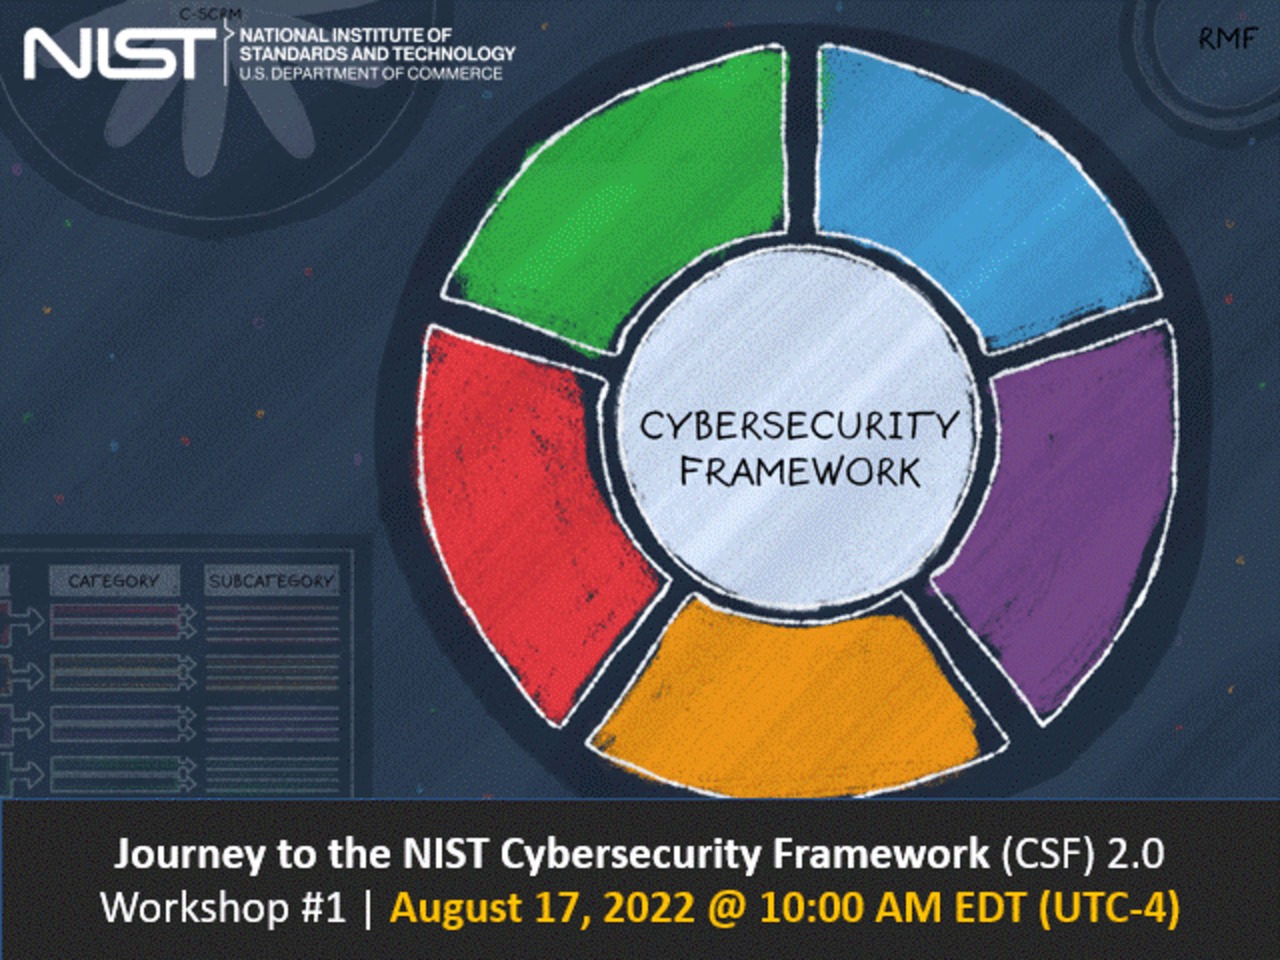 Journey to the NIST Cybersecurity Framework (CSF) 2.0 | Workshop #1 CSF 2.0.5